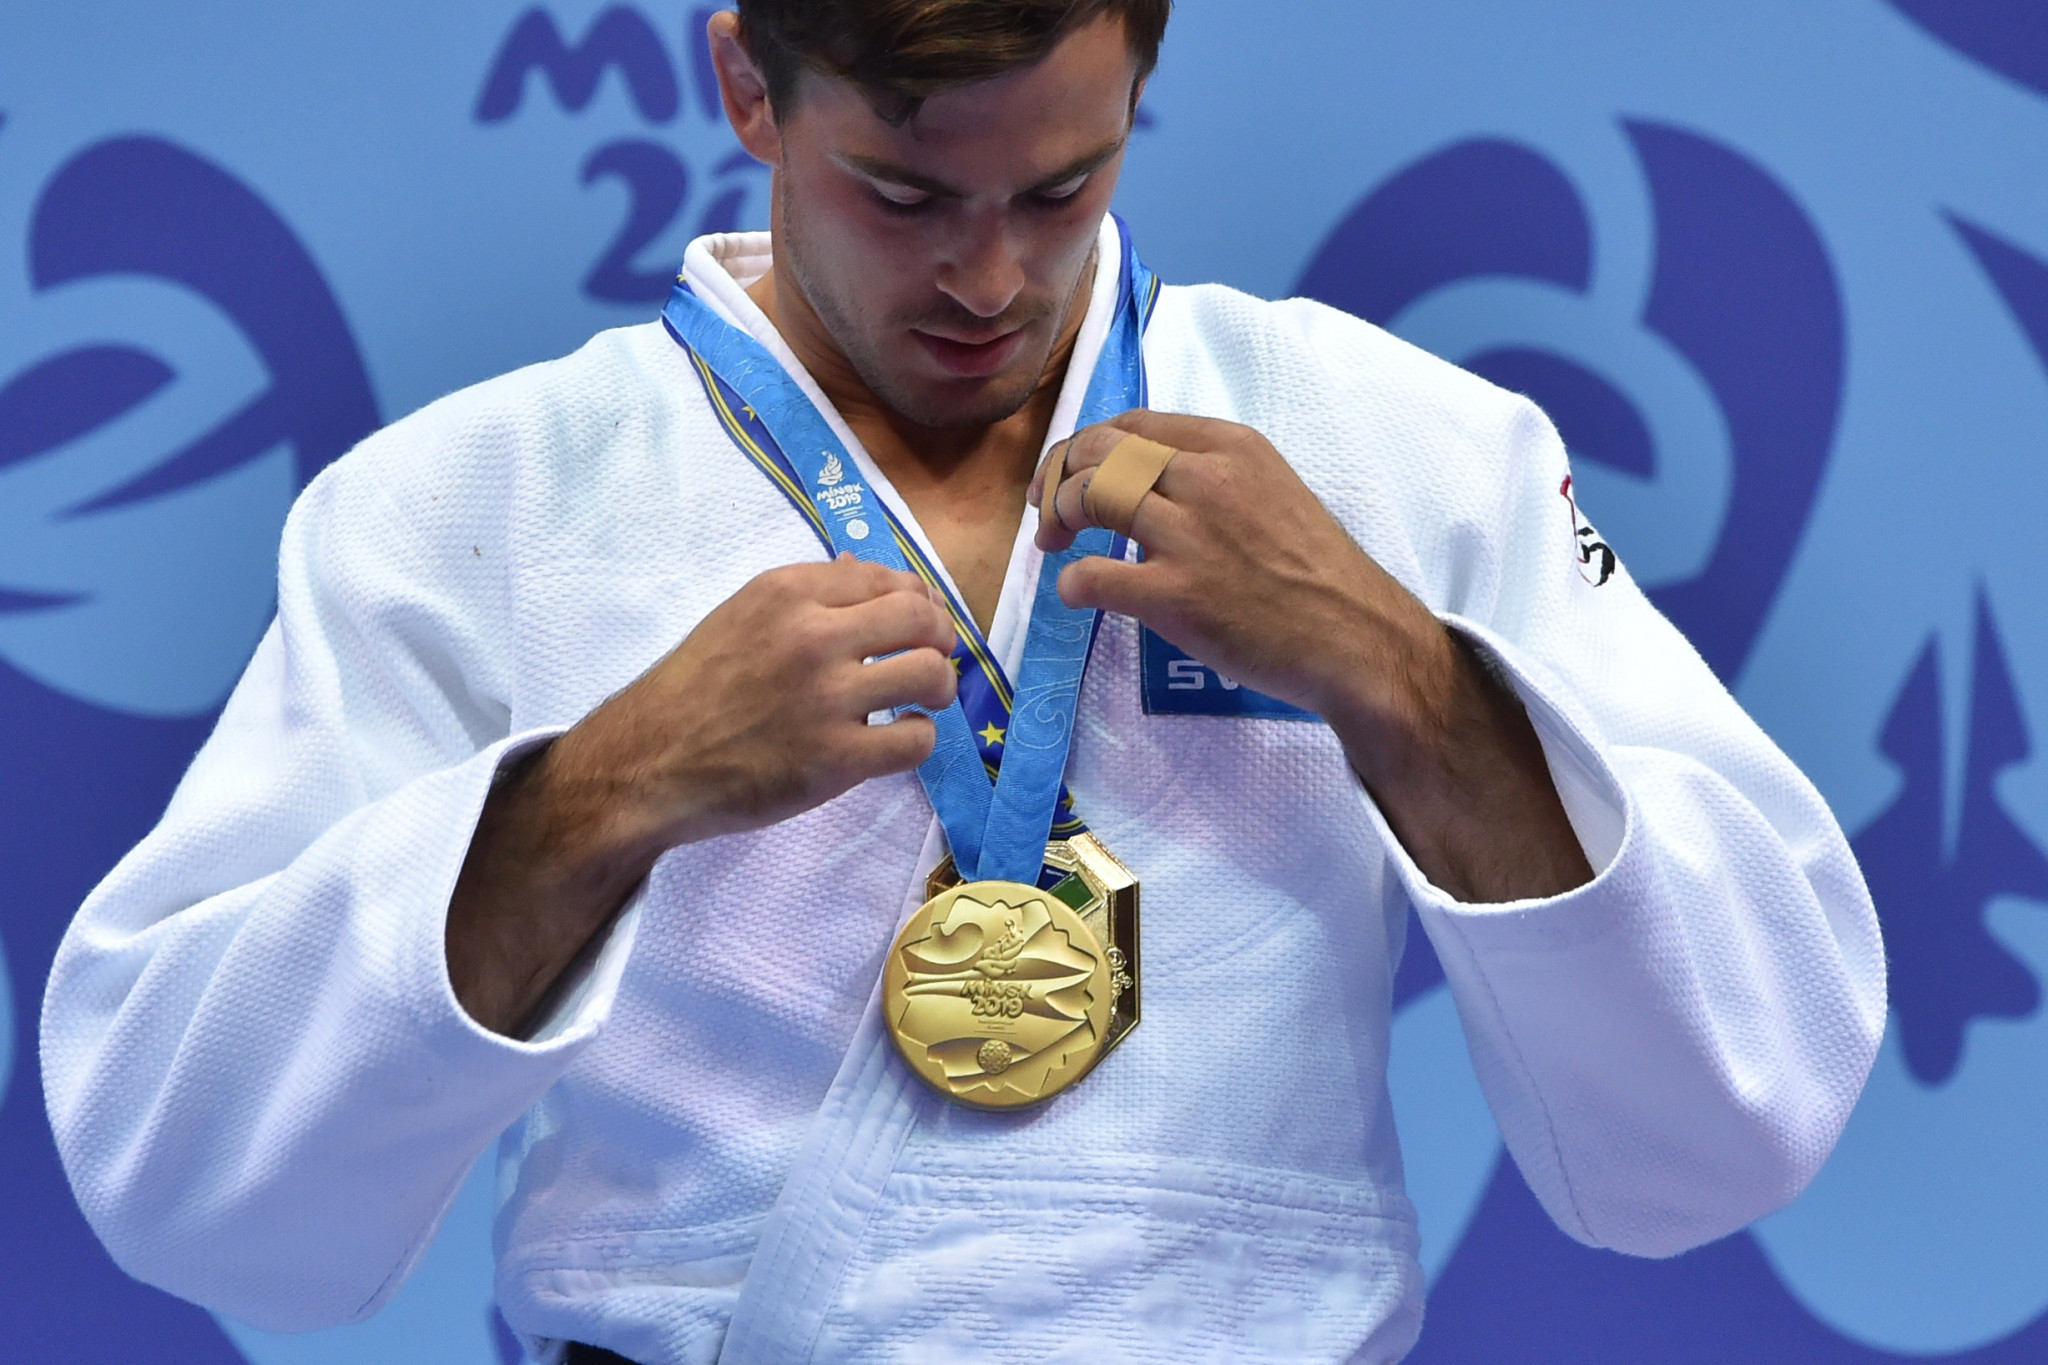 Macias pulls off surprise win over Rio 2016 silver medallist Orujov to win men’s under-73kg judo gold